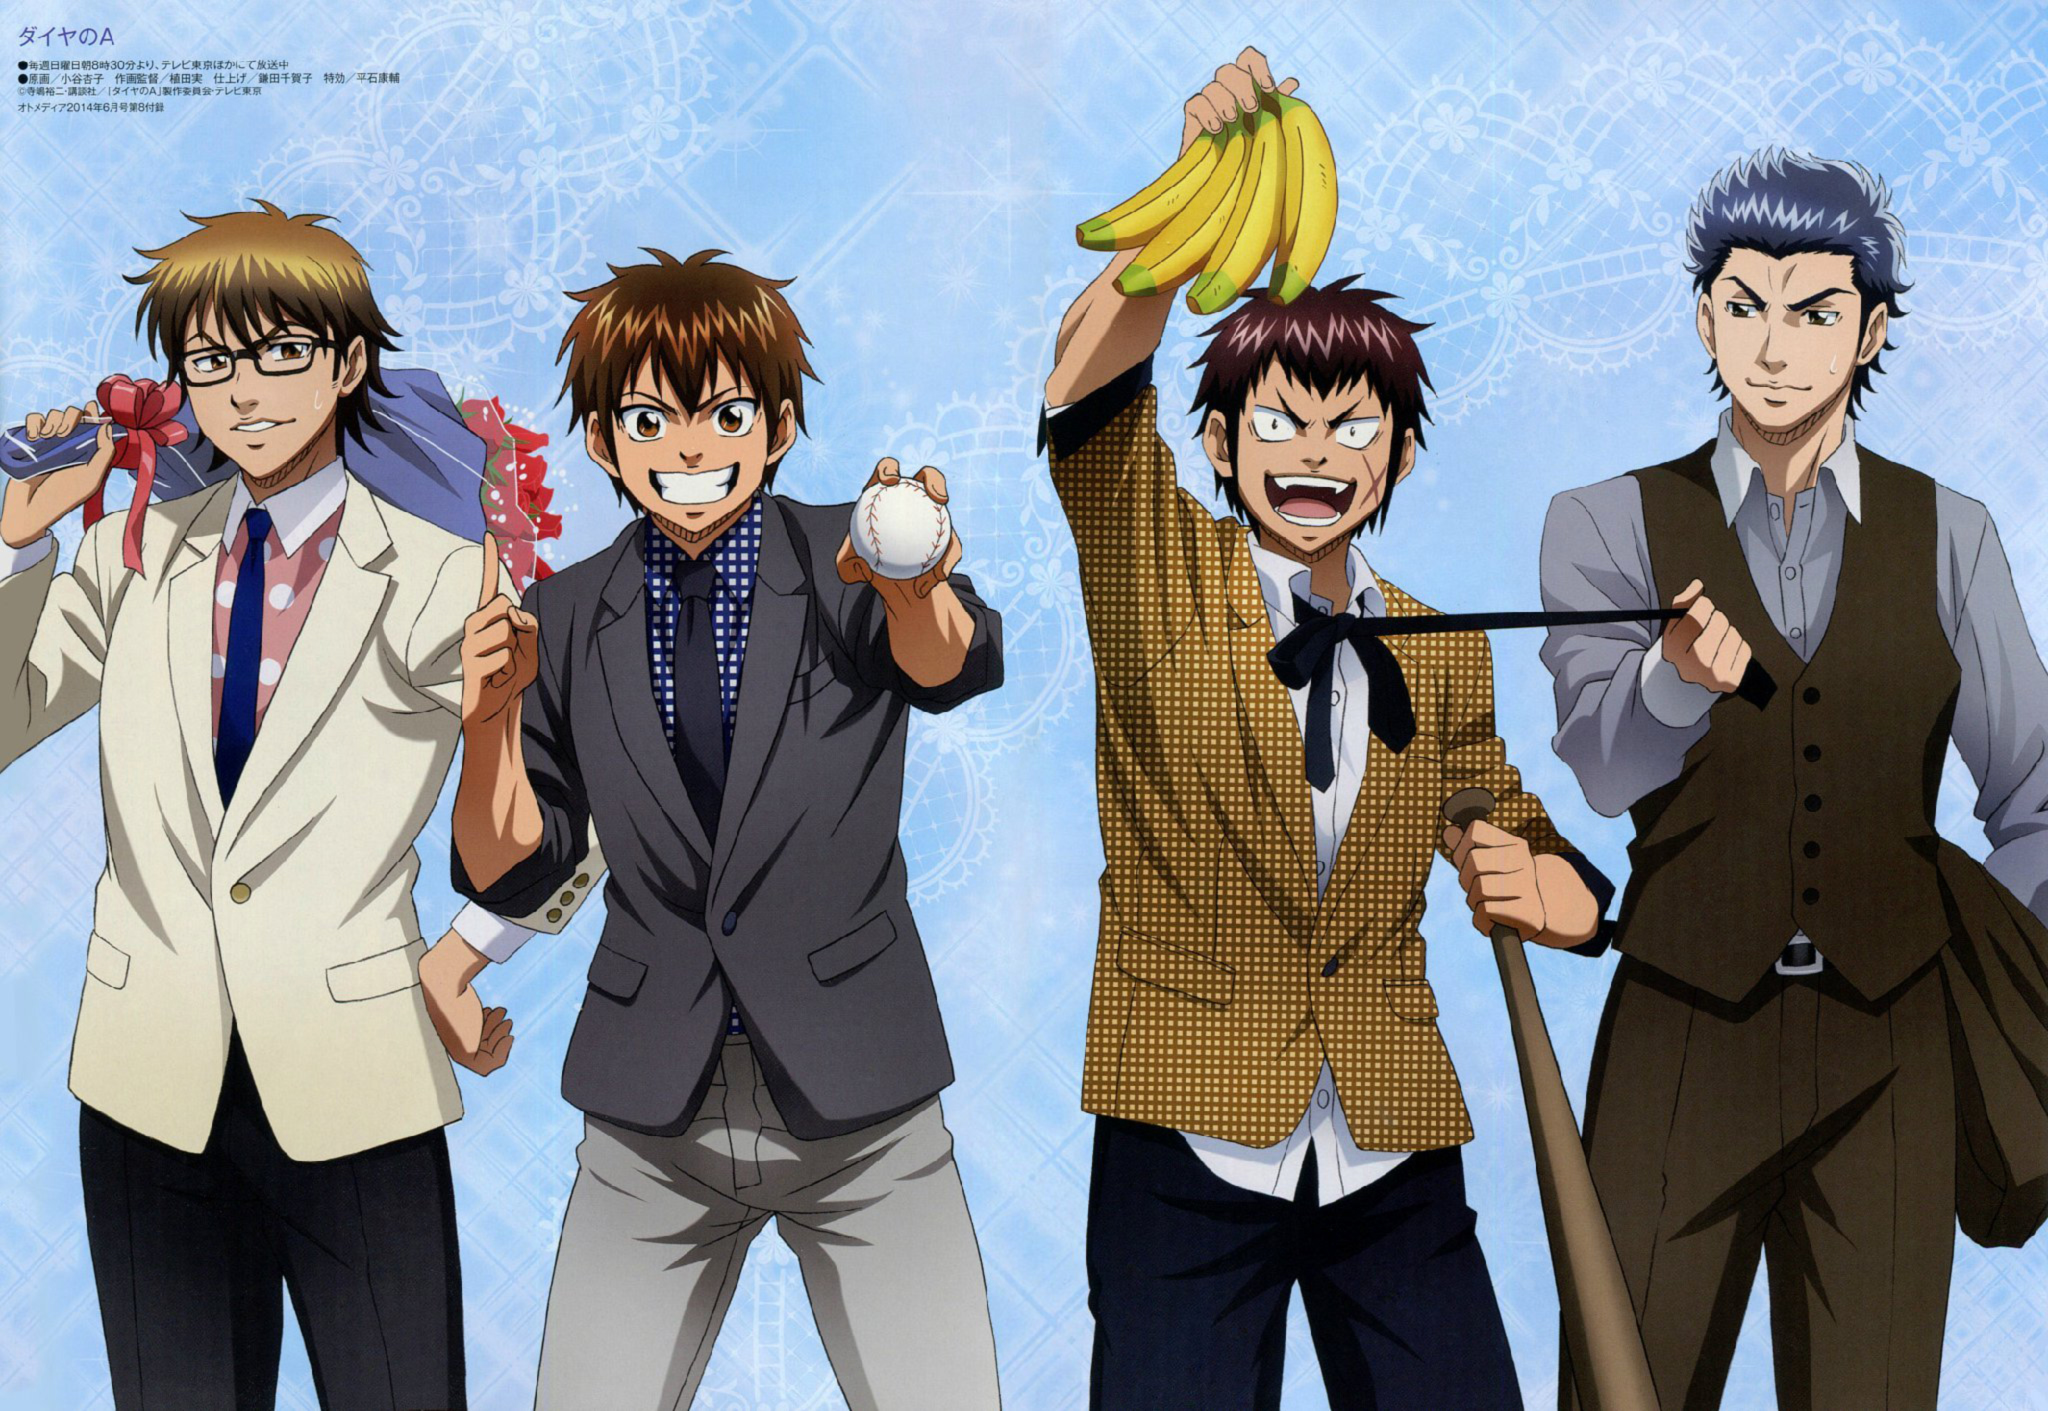 Anime Ace of Diamond HD Wallpaper | Background Image